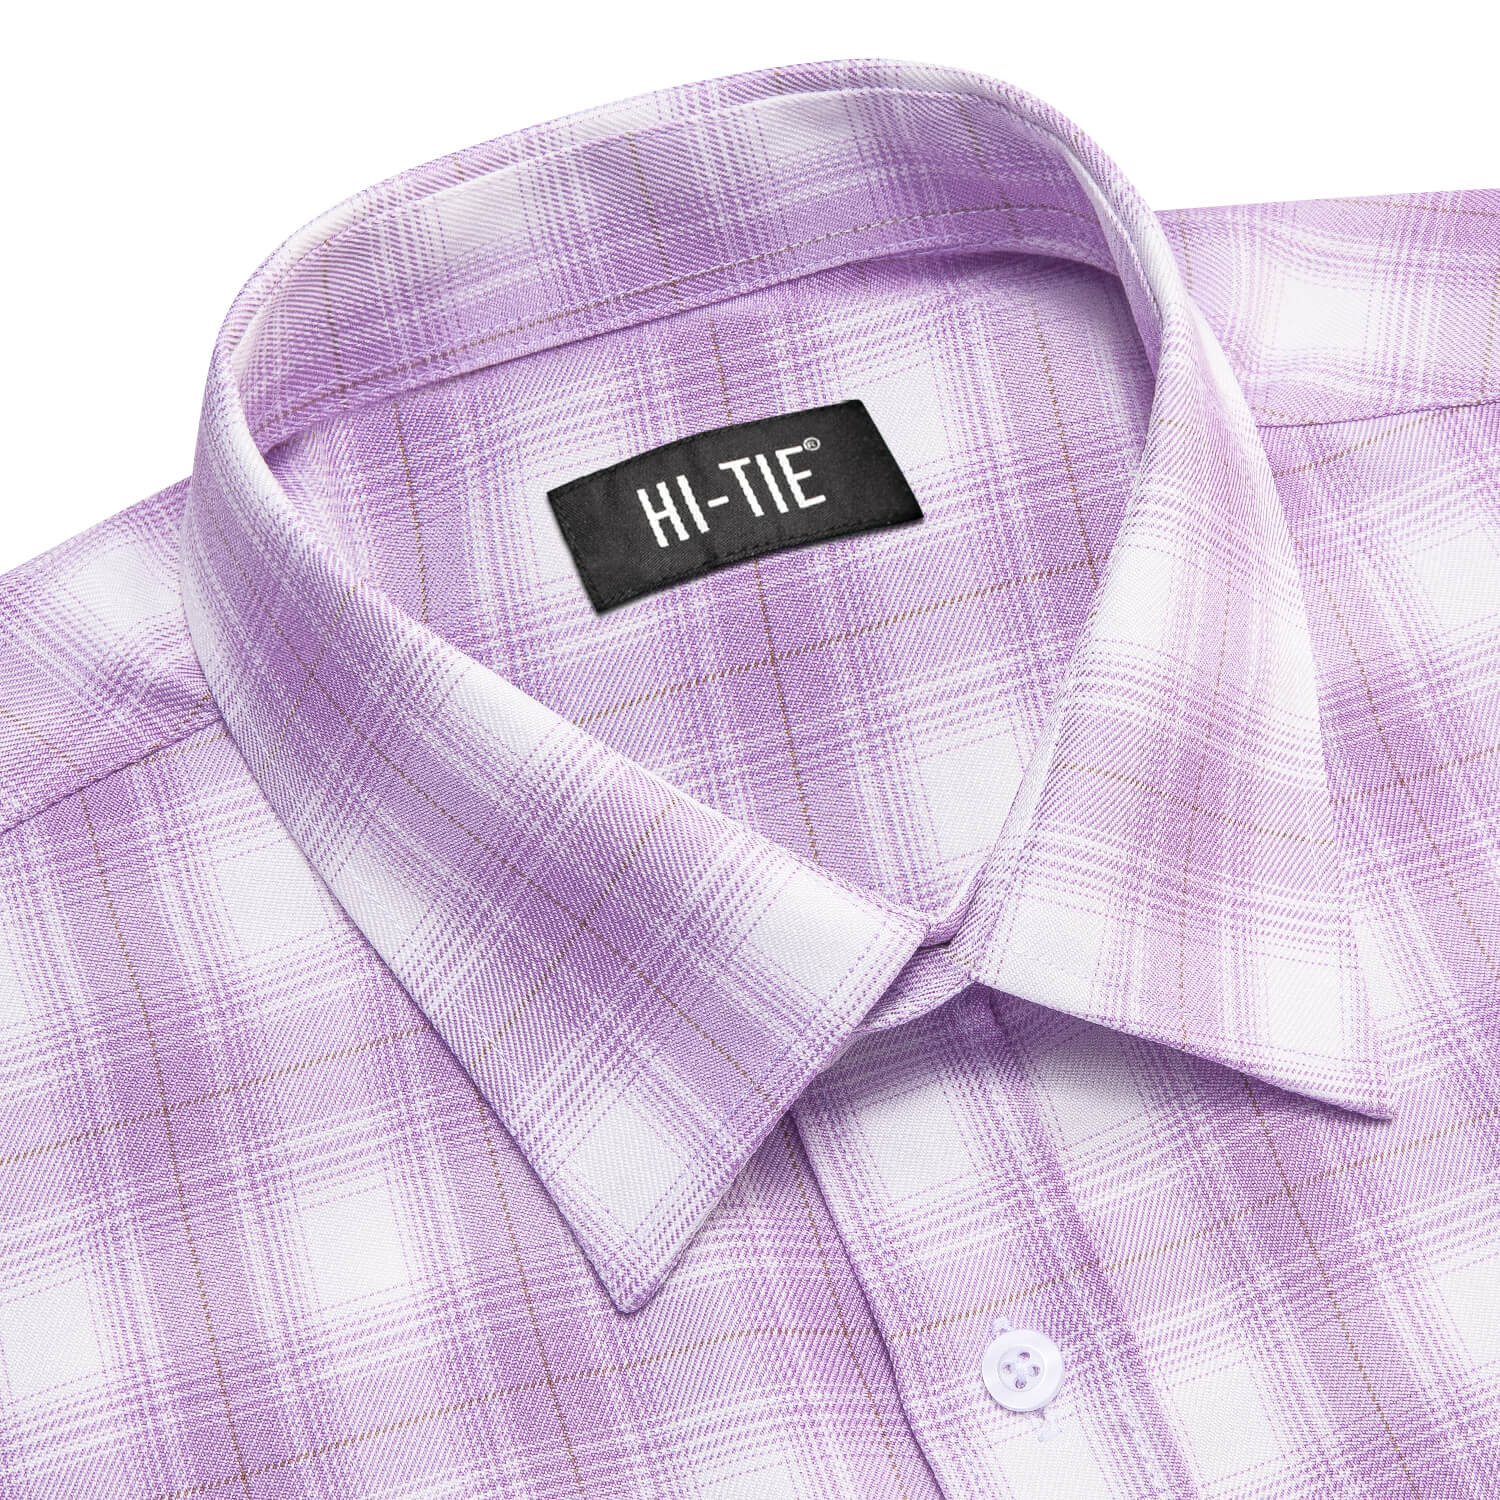 Hi-Tie Button Down Shirt Purple White Plaid Men's Silk Long Sleeve Shirt